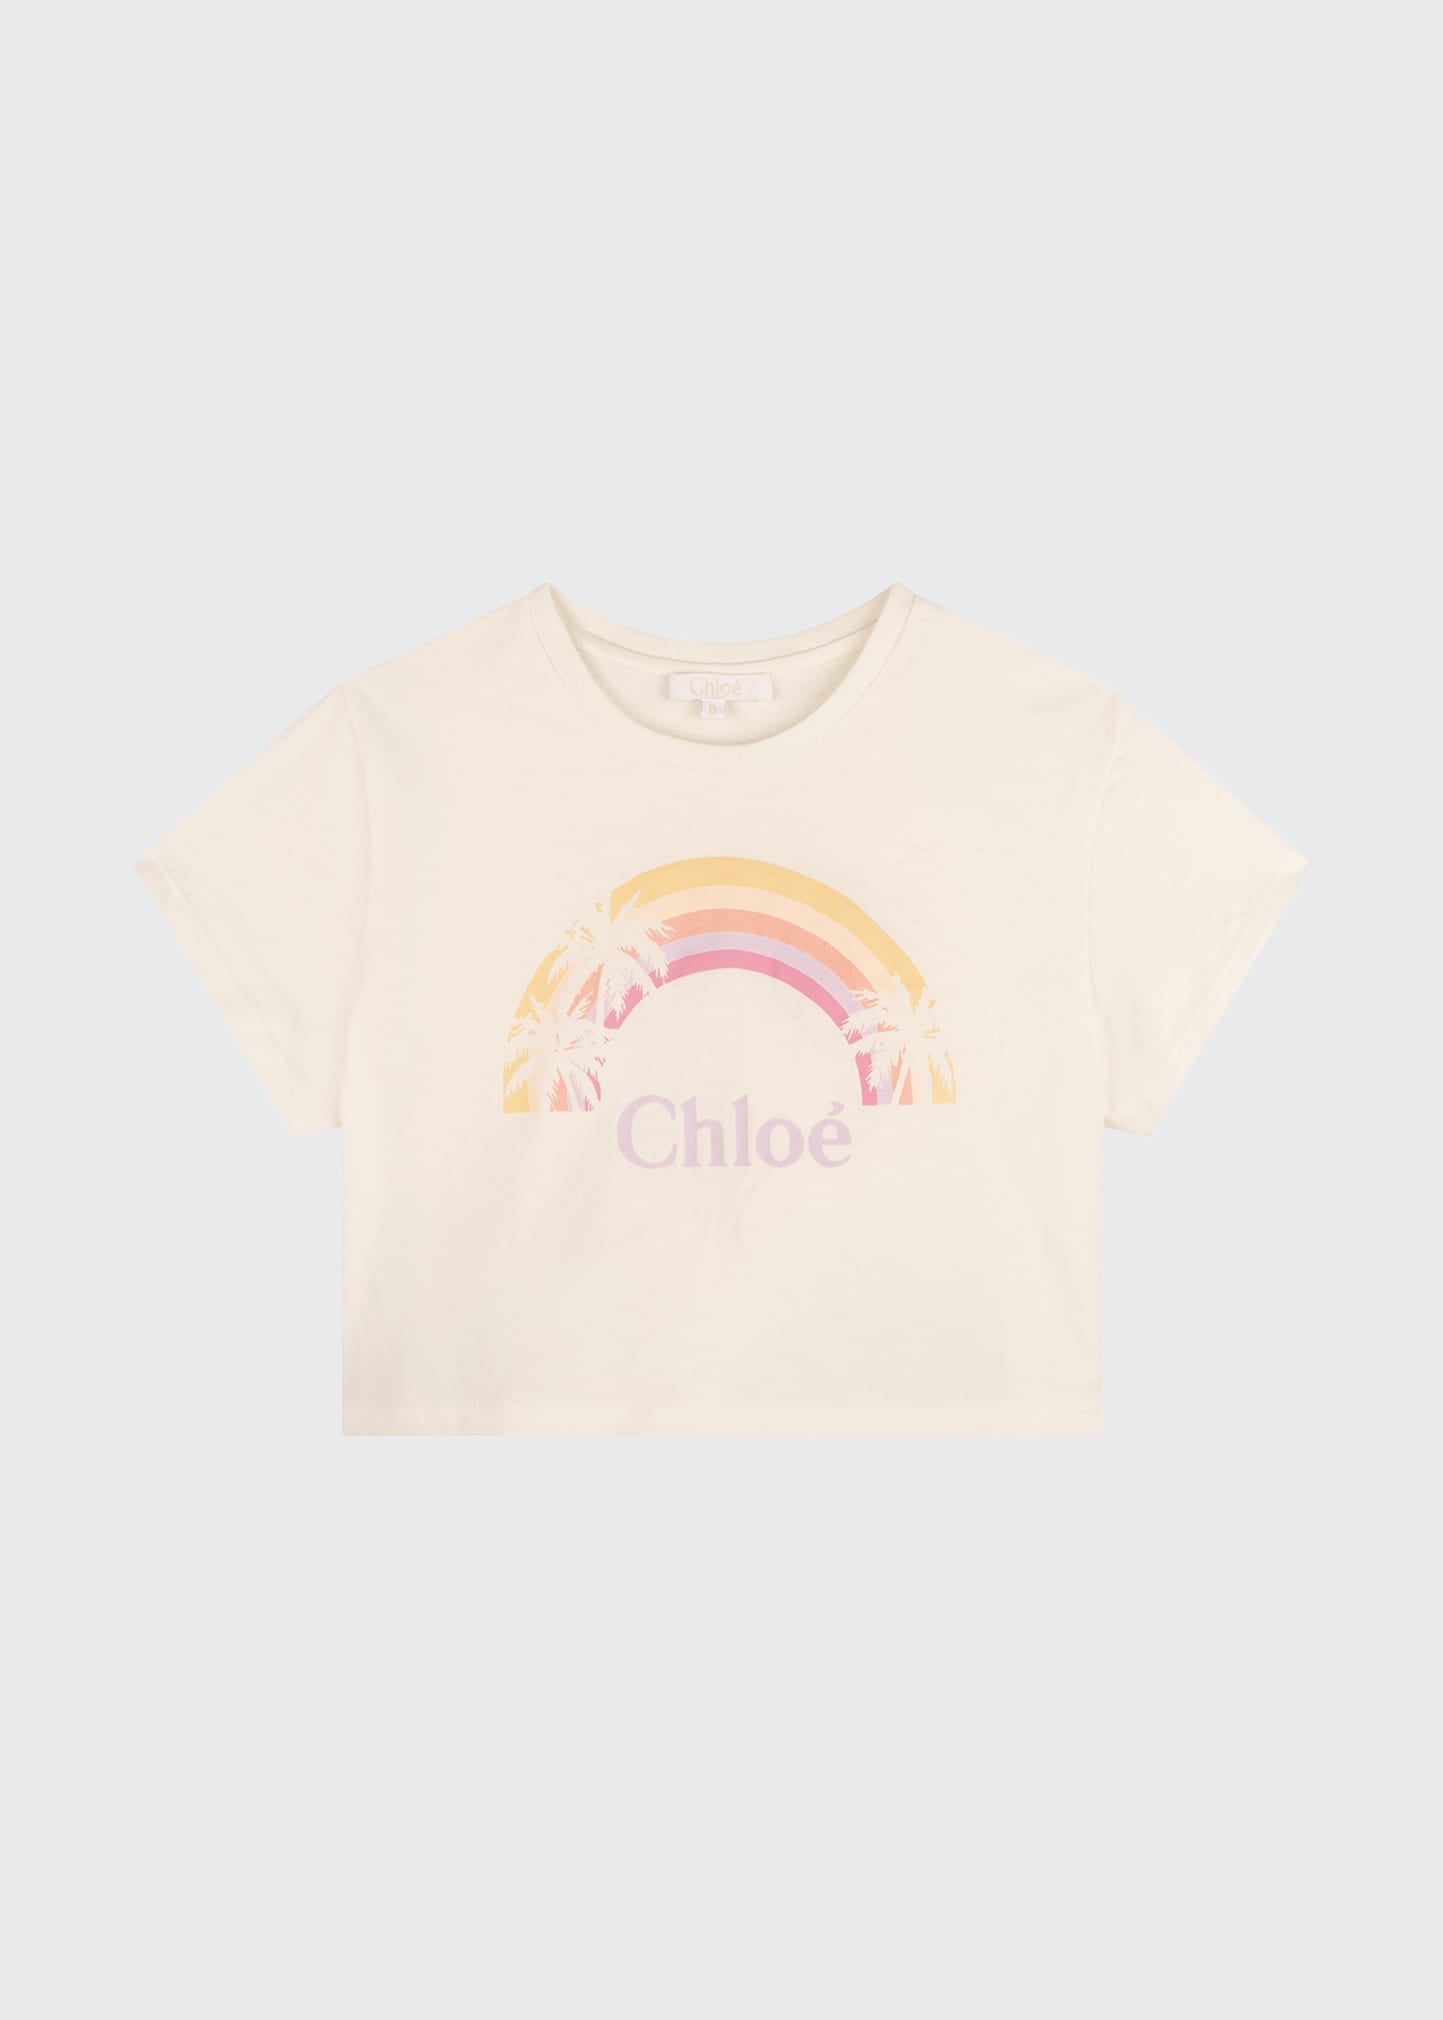 Chloe Girl's Logo Rainbow-Print Cropped T-Shirt, Size 6-12